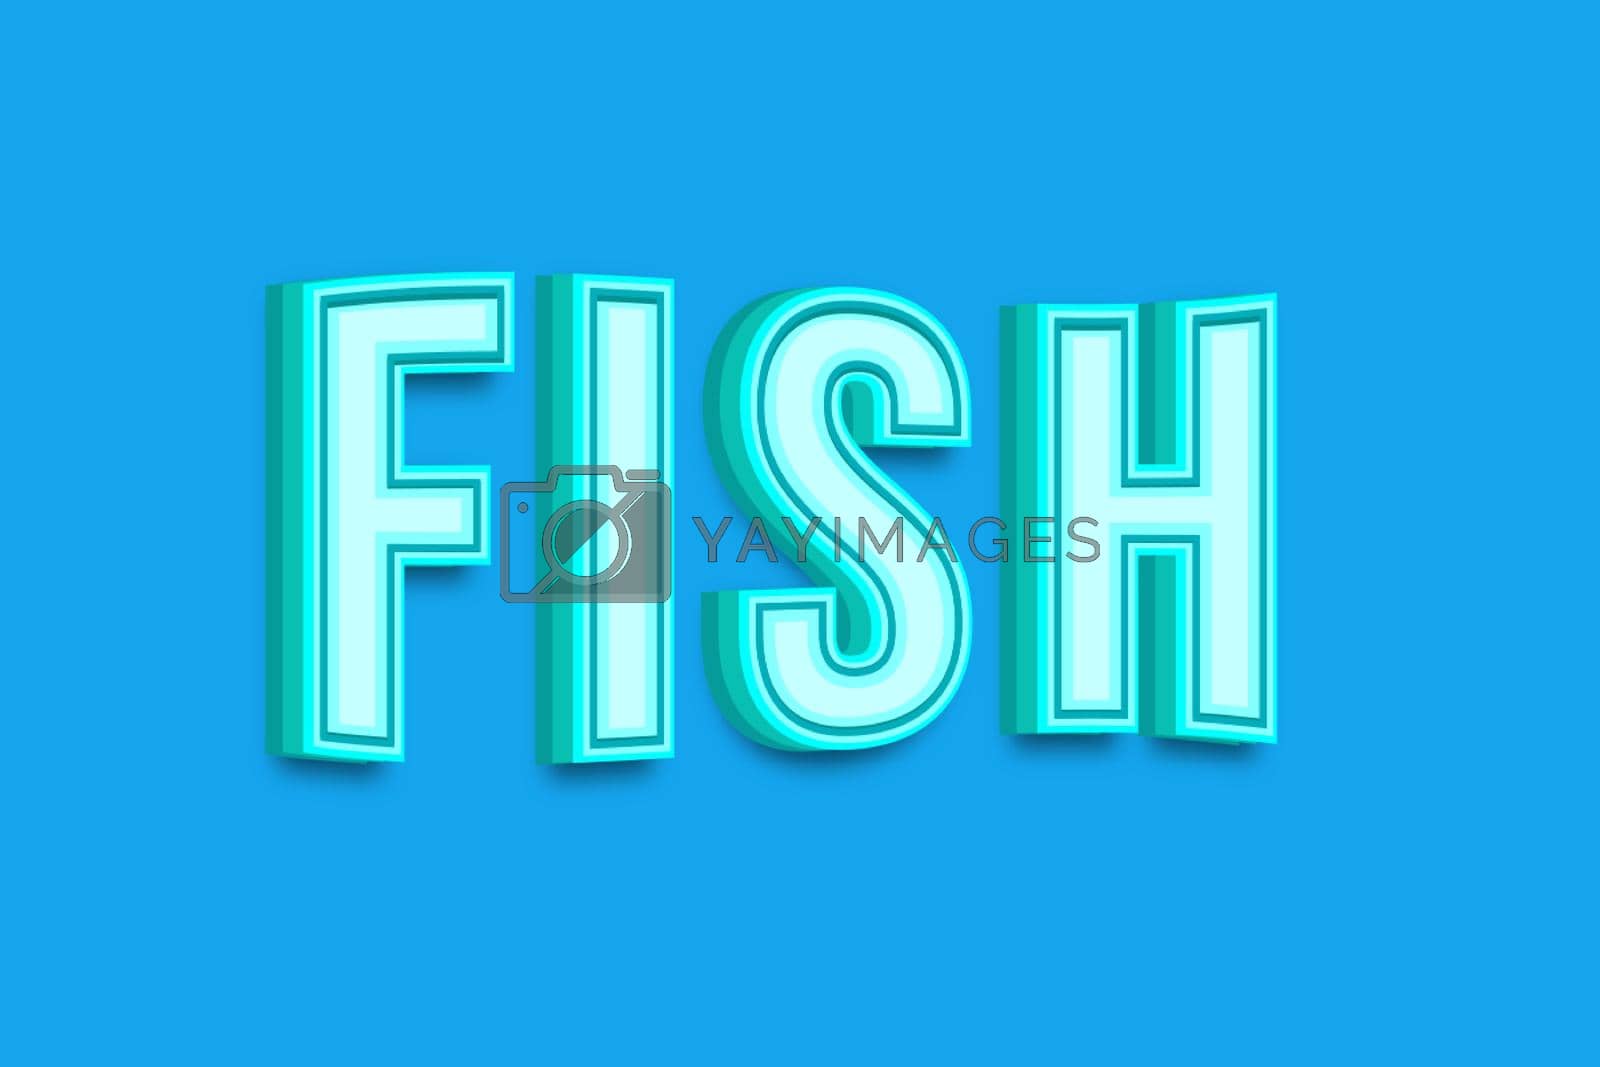 Royalty free image of Editable text effects Fish by Rahmat_Djayusman